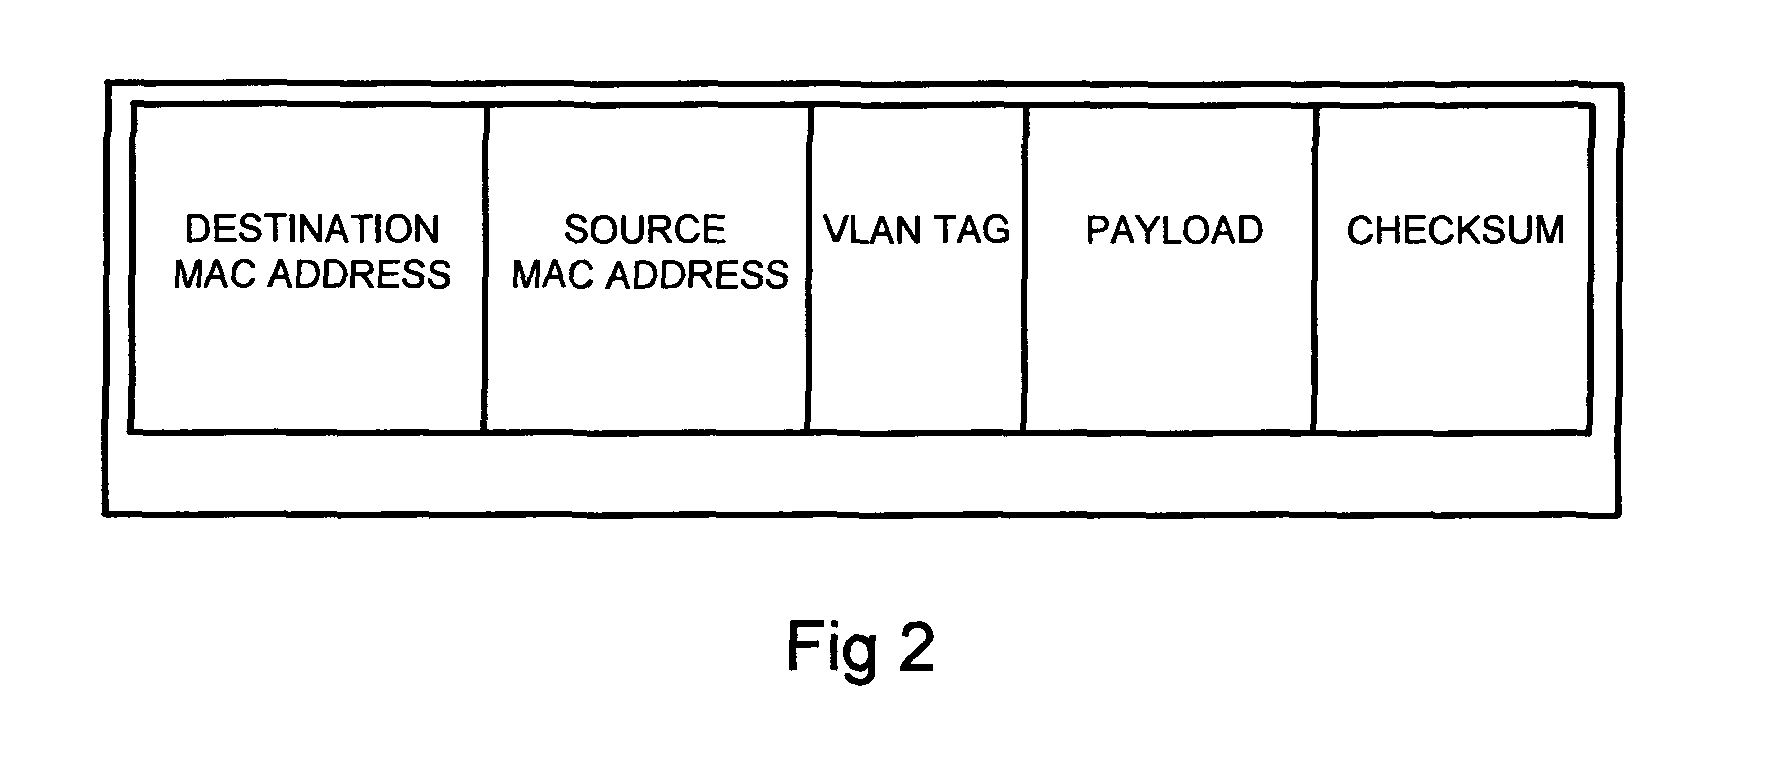 Ethernet forwarding database method